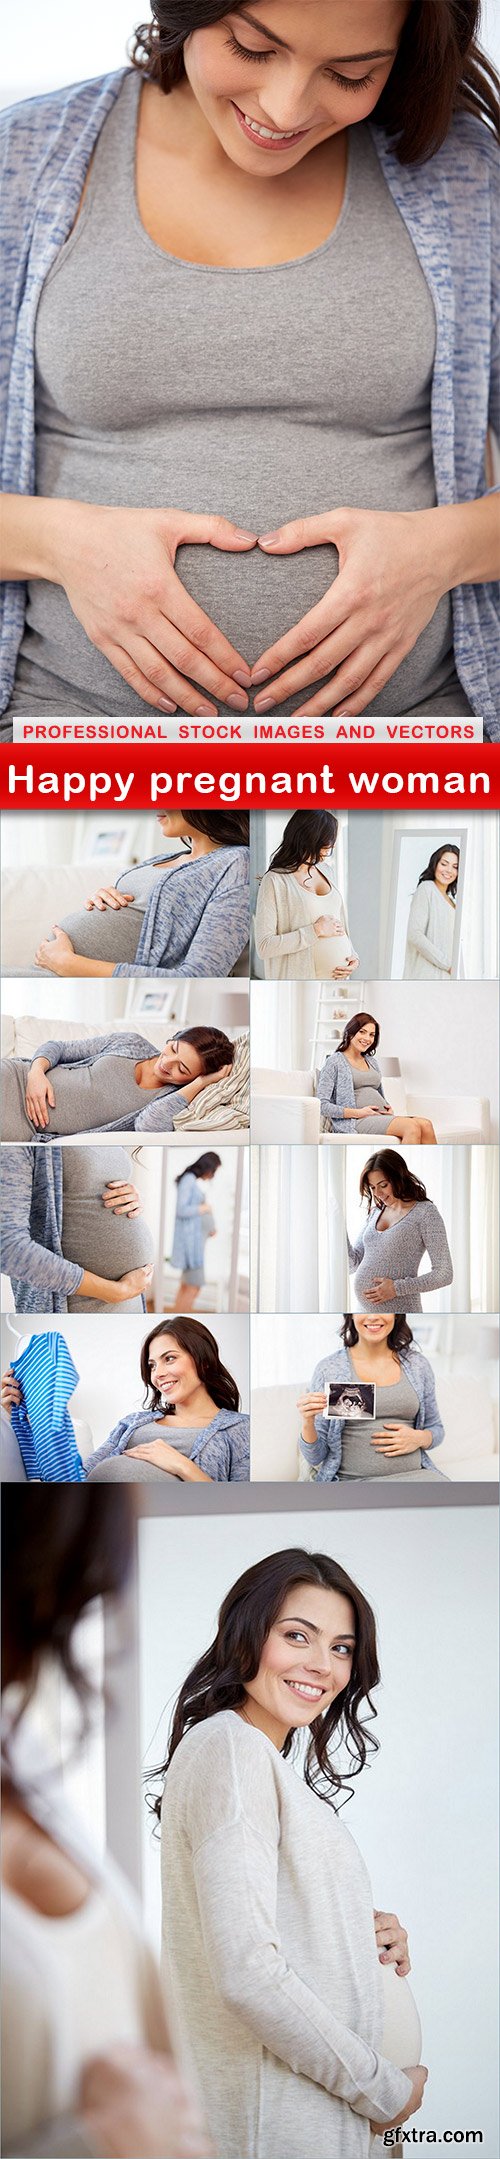 Happy pregnant woman - 10 UHQ JPEG